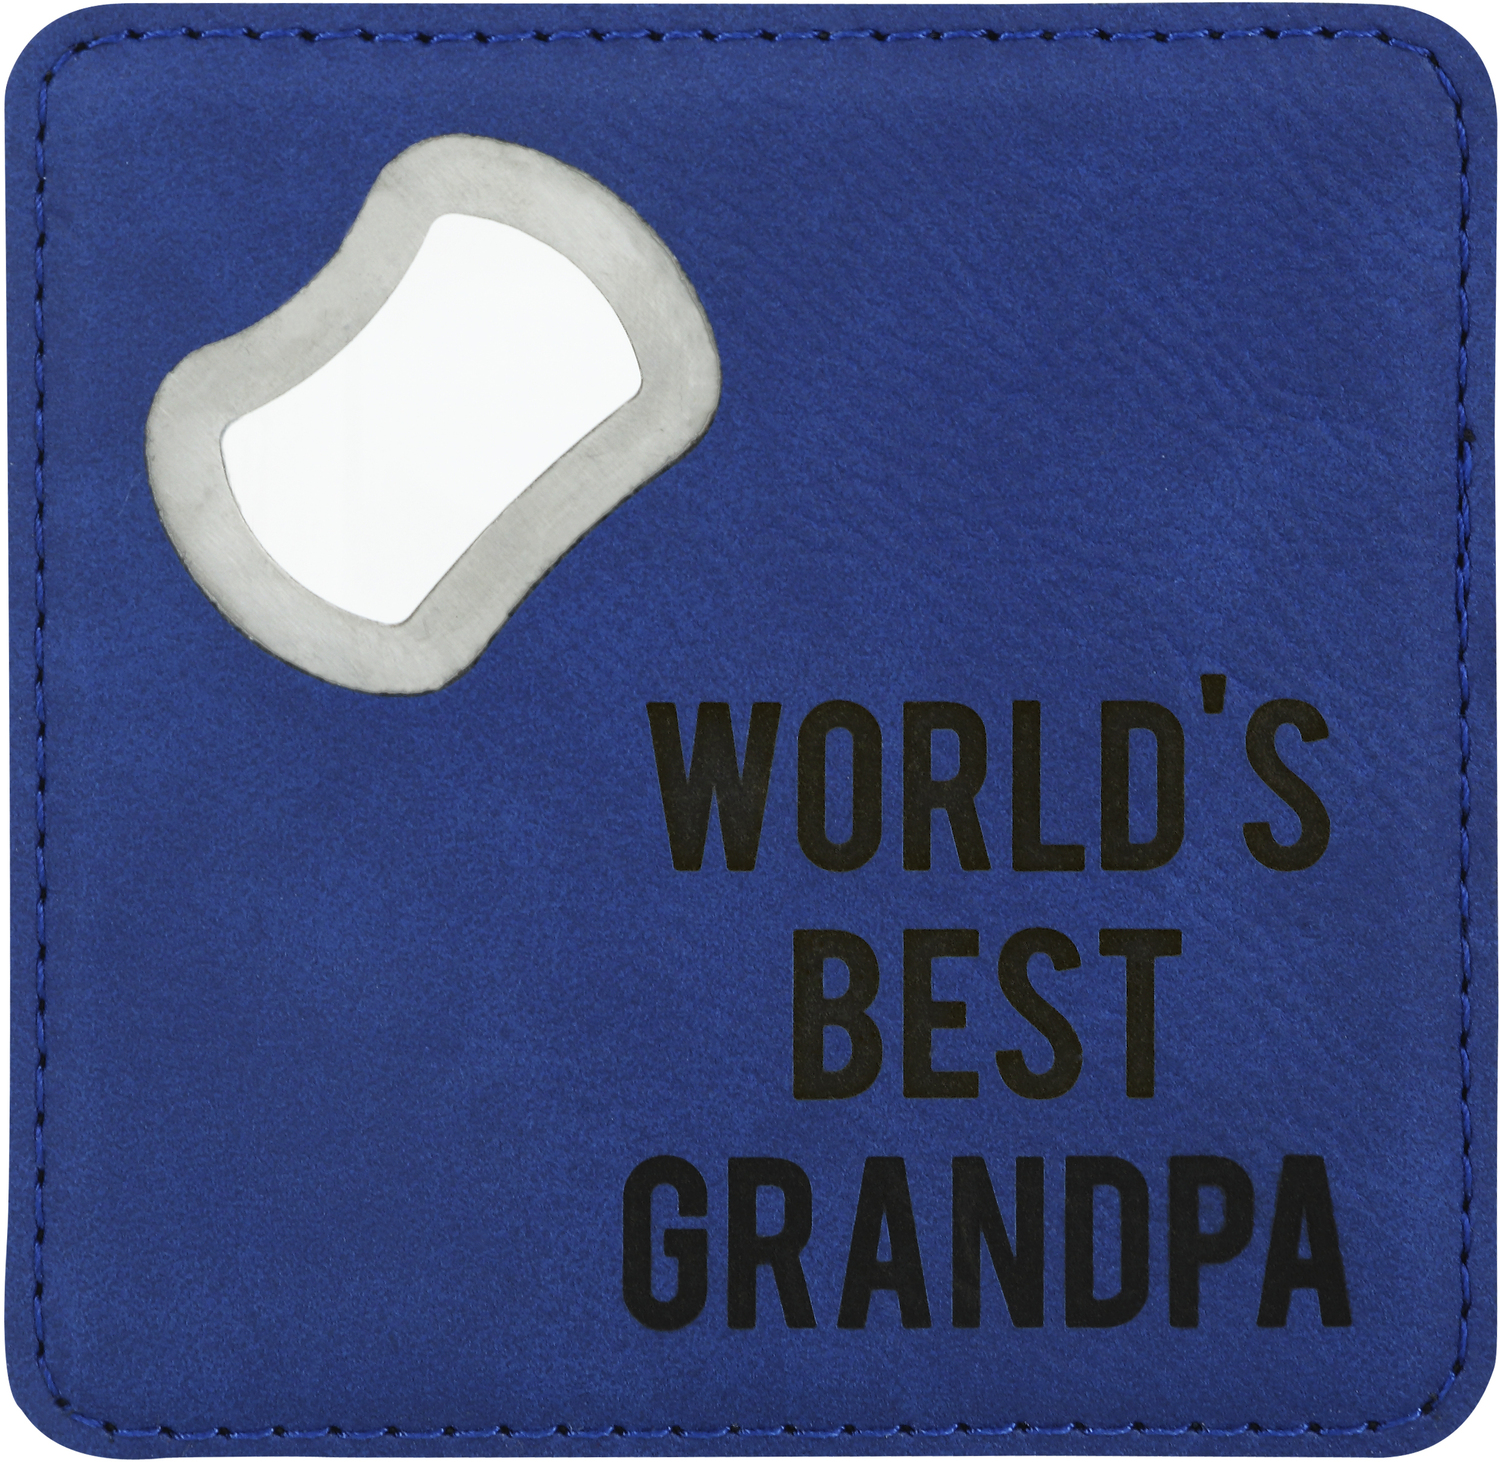 Grandpa by Man Made - Grandpa - 4" x 4" Bottle Opener Coaster